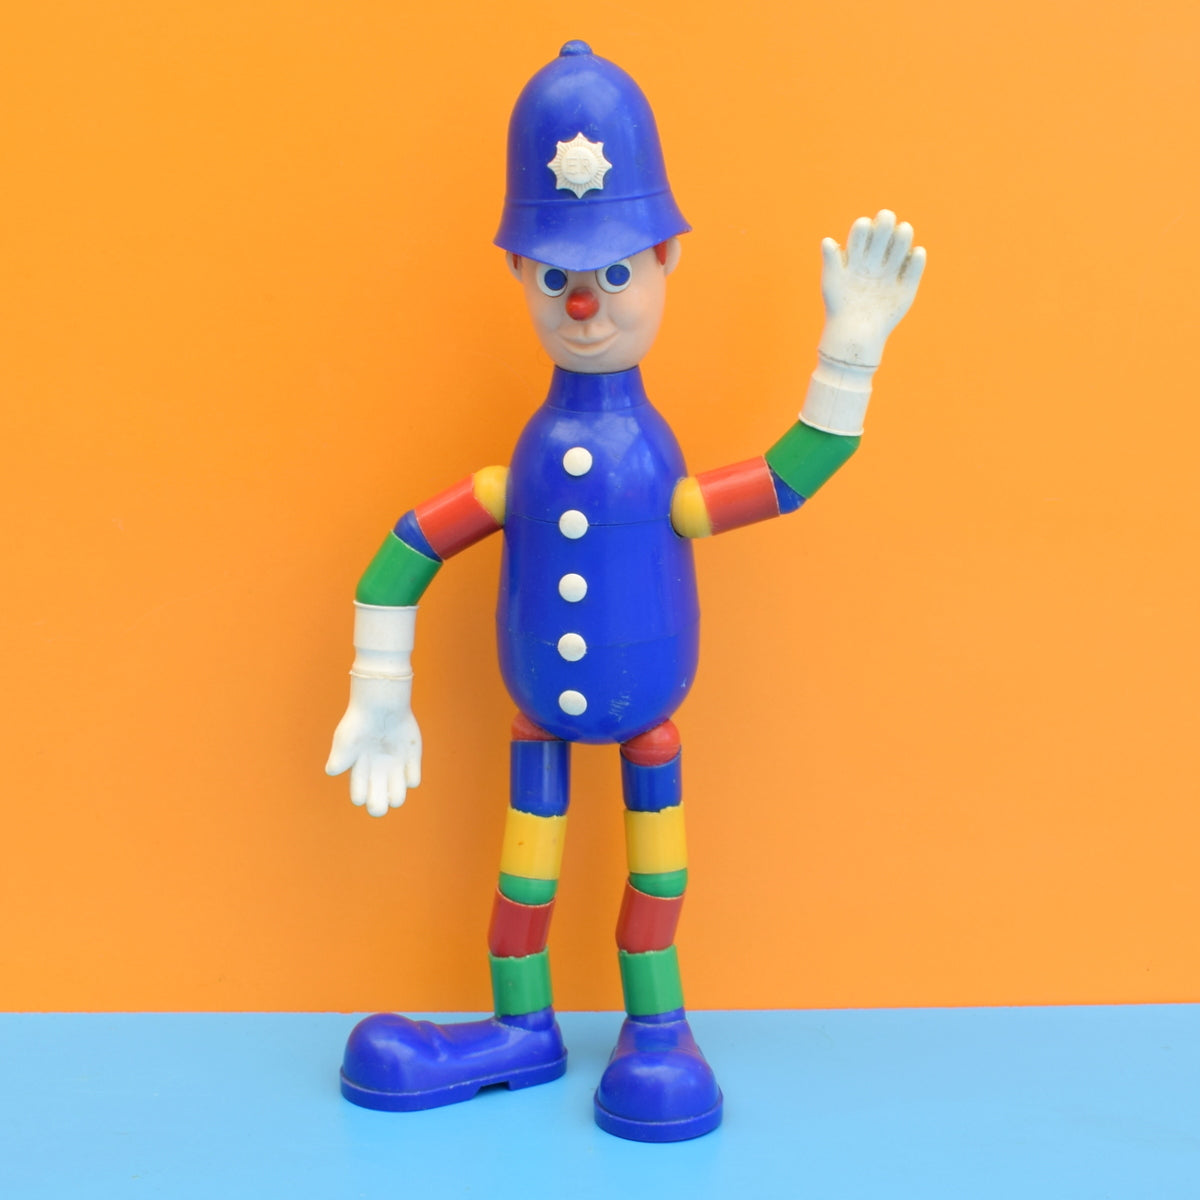 Vintage 1960s Bendy Policeman Toy - Merit Safe Play